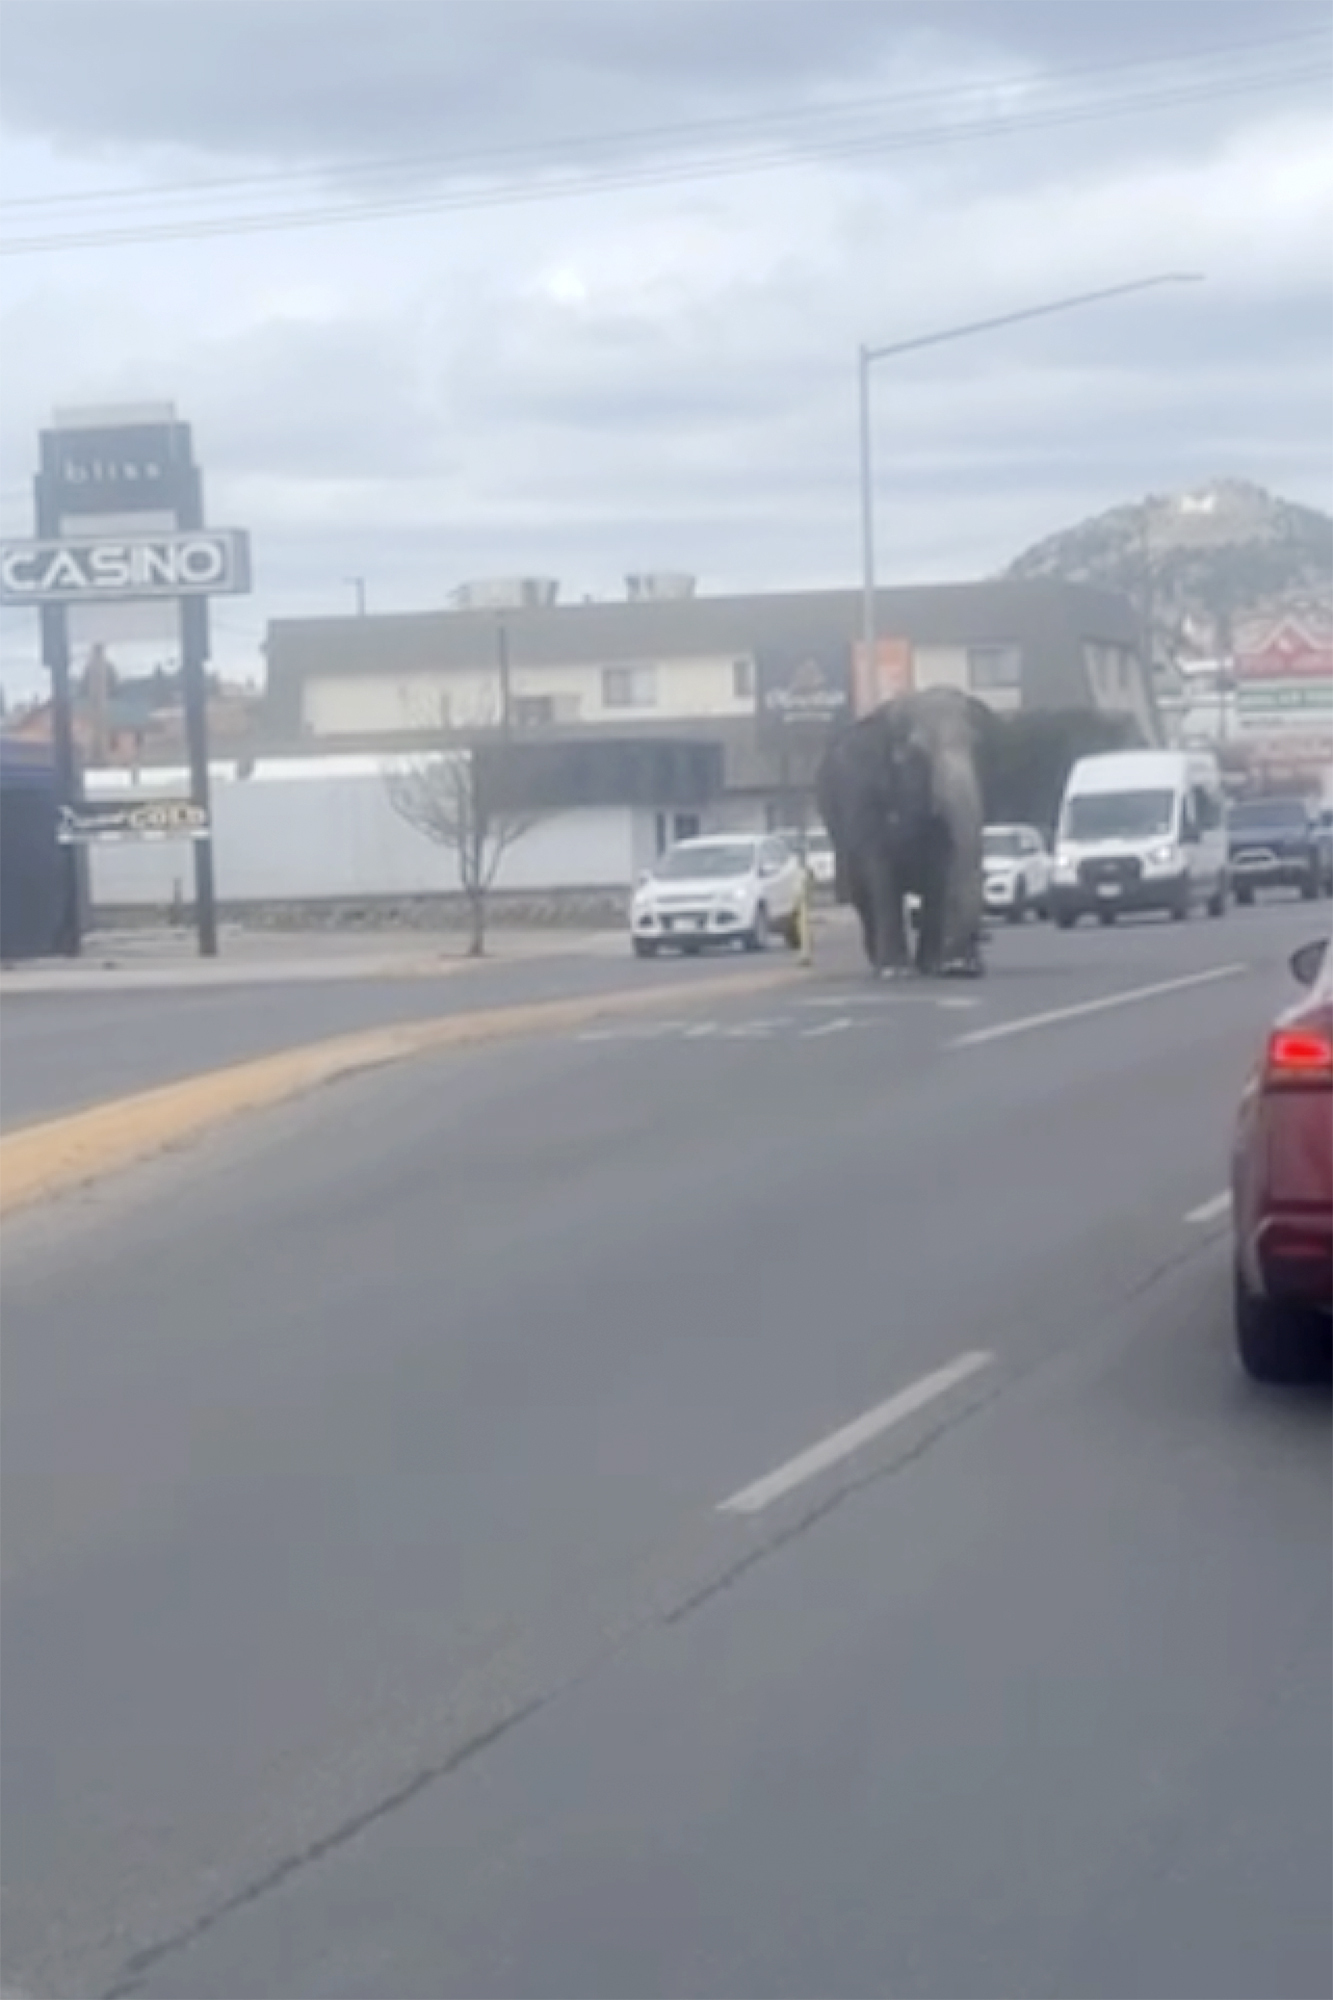 a vehicle backfiring startled a circus elephant into a montana street. she still performed tuesday